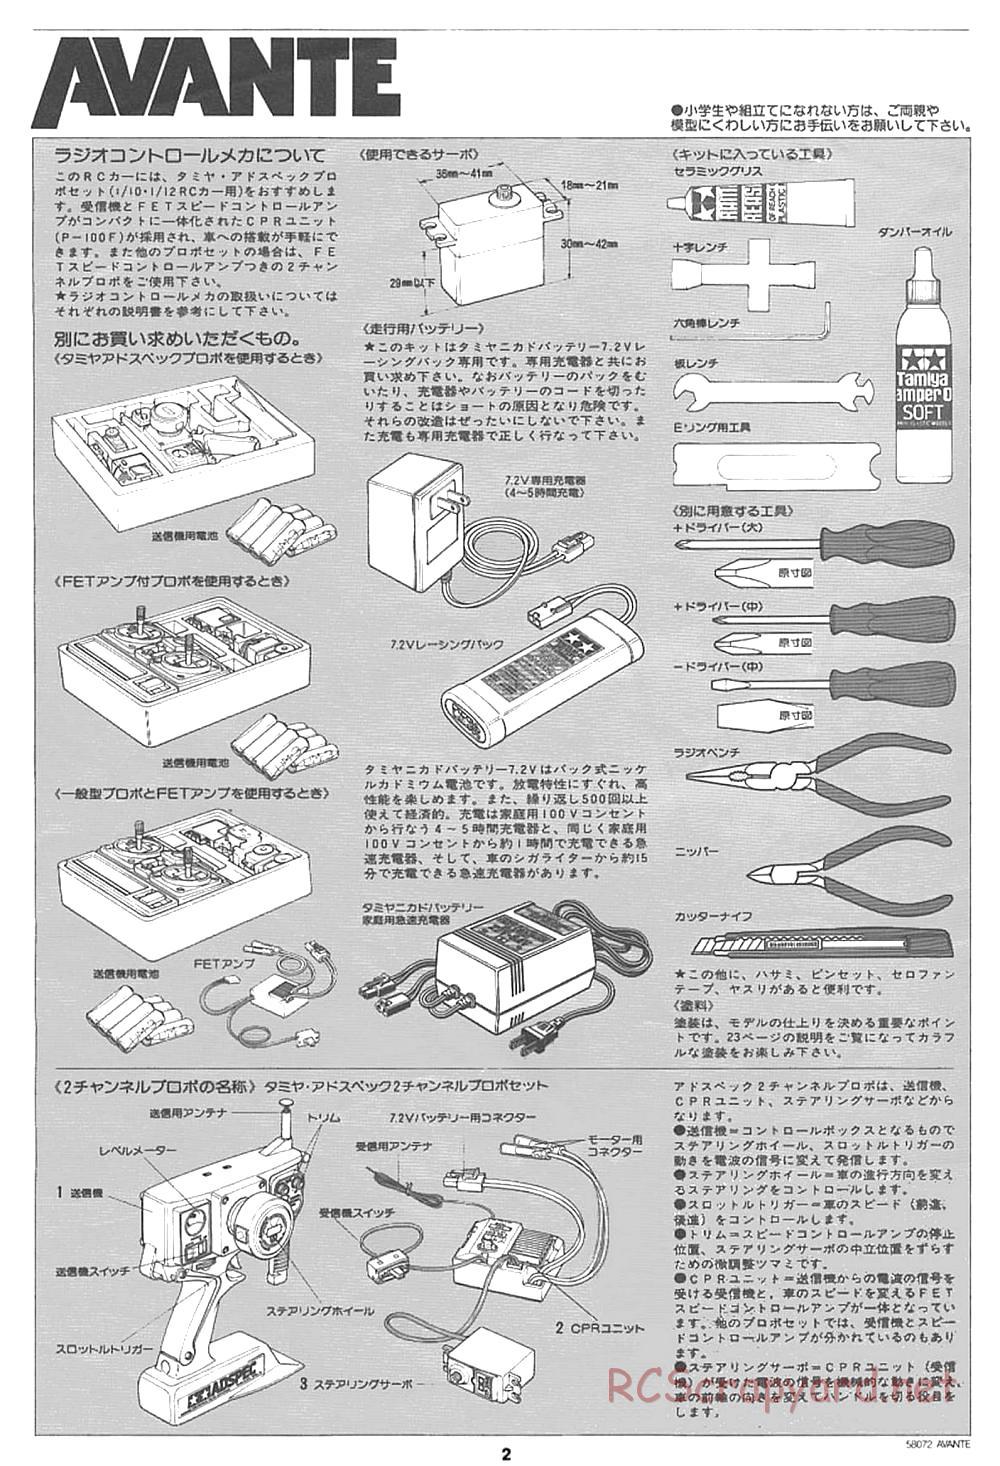 Tamiya - Avante - 58072 - Manual - Page 2